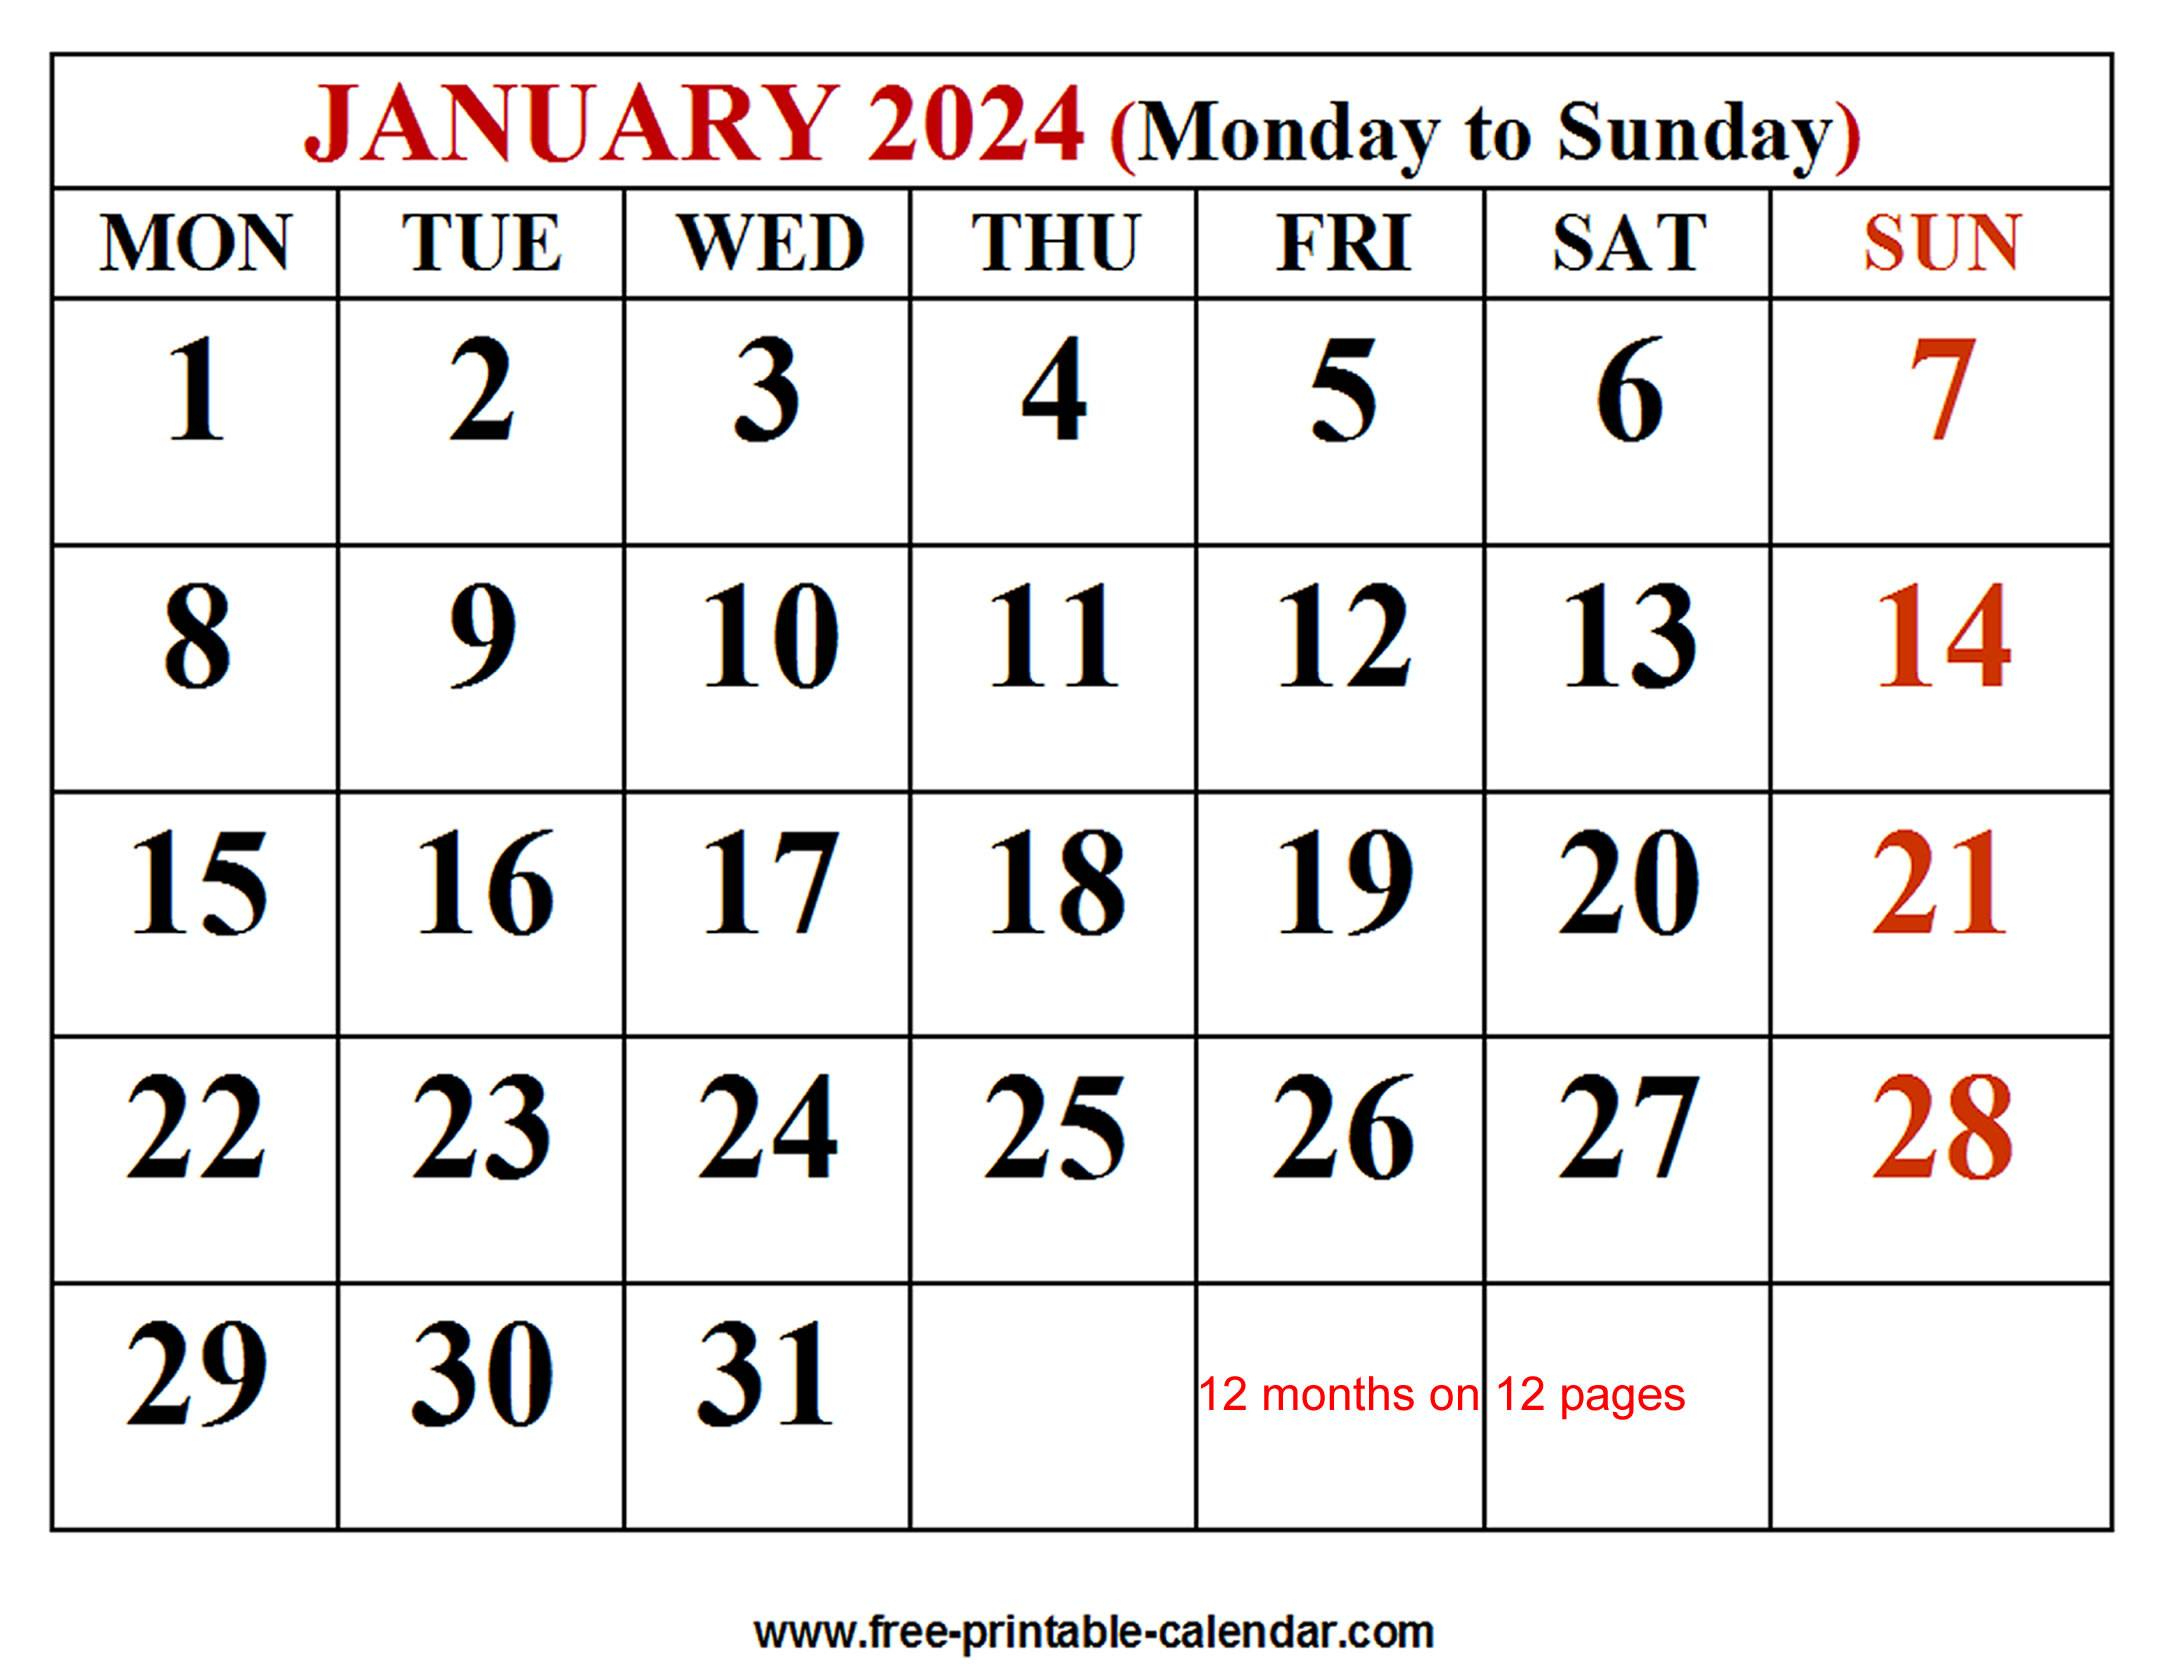 2024 Calendar Template - Free-Printable-Calendar | Printable Calendar 2024 Template